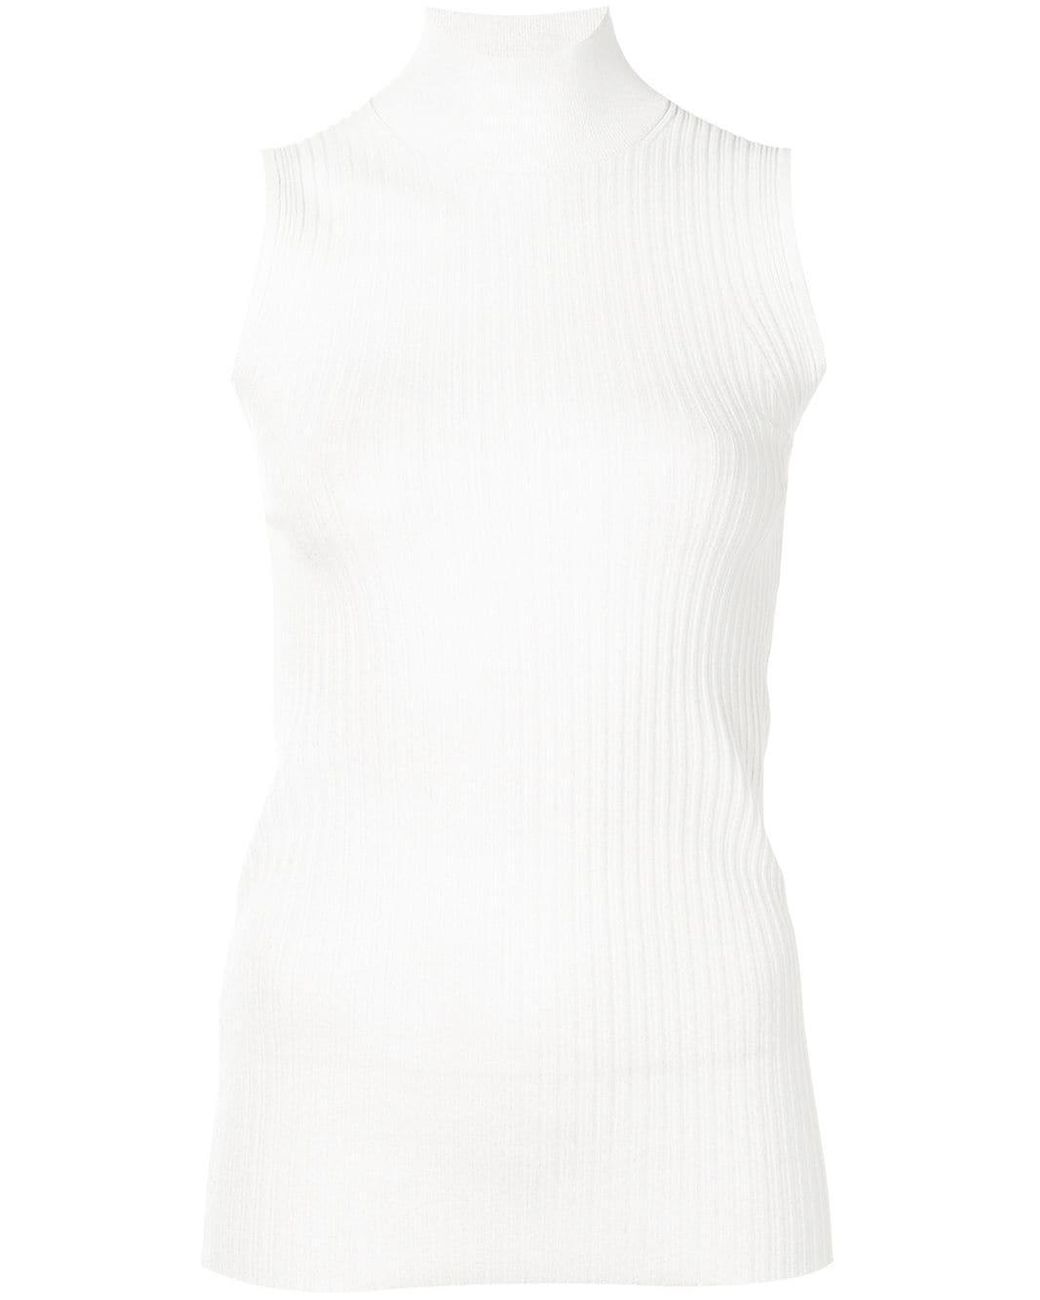 PROENZA SCHOULER WHITE LABEL Sleeveless Turtleneck Top in White - Lyst